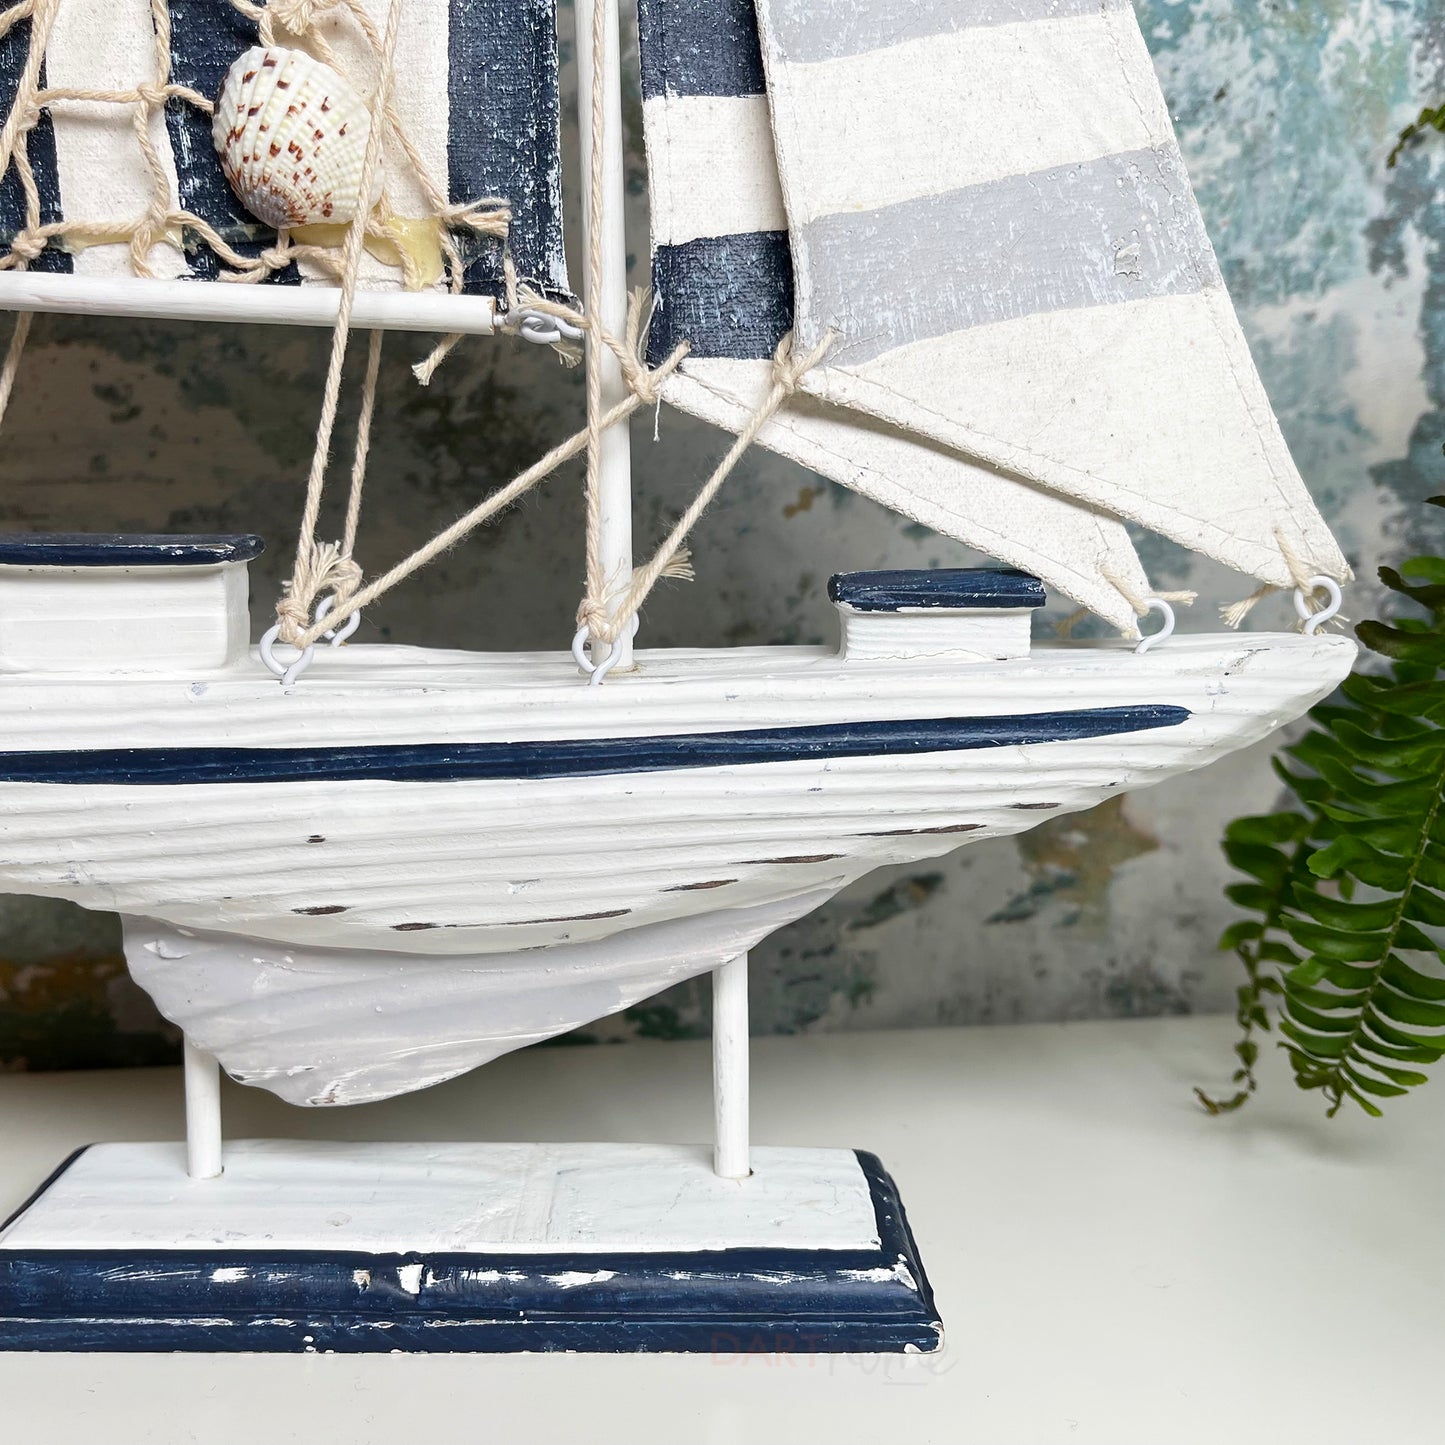 Blue & White Sailing Boat Model Bathroom Ornament